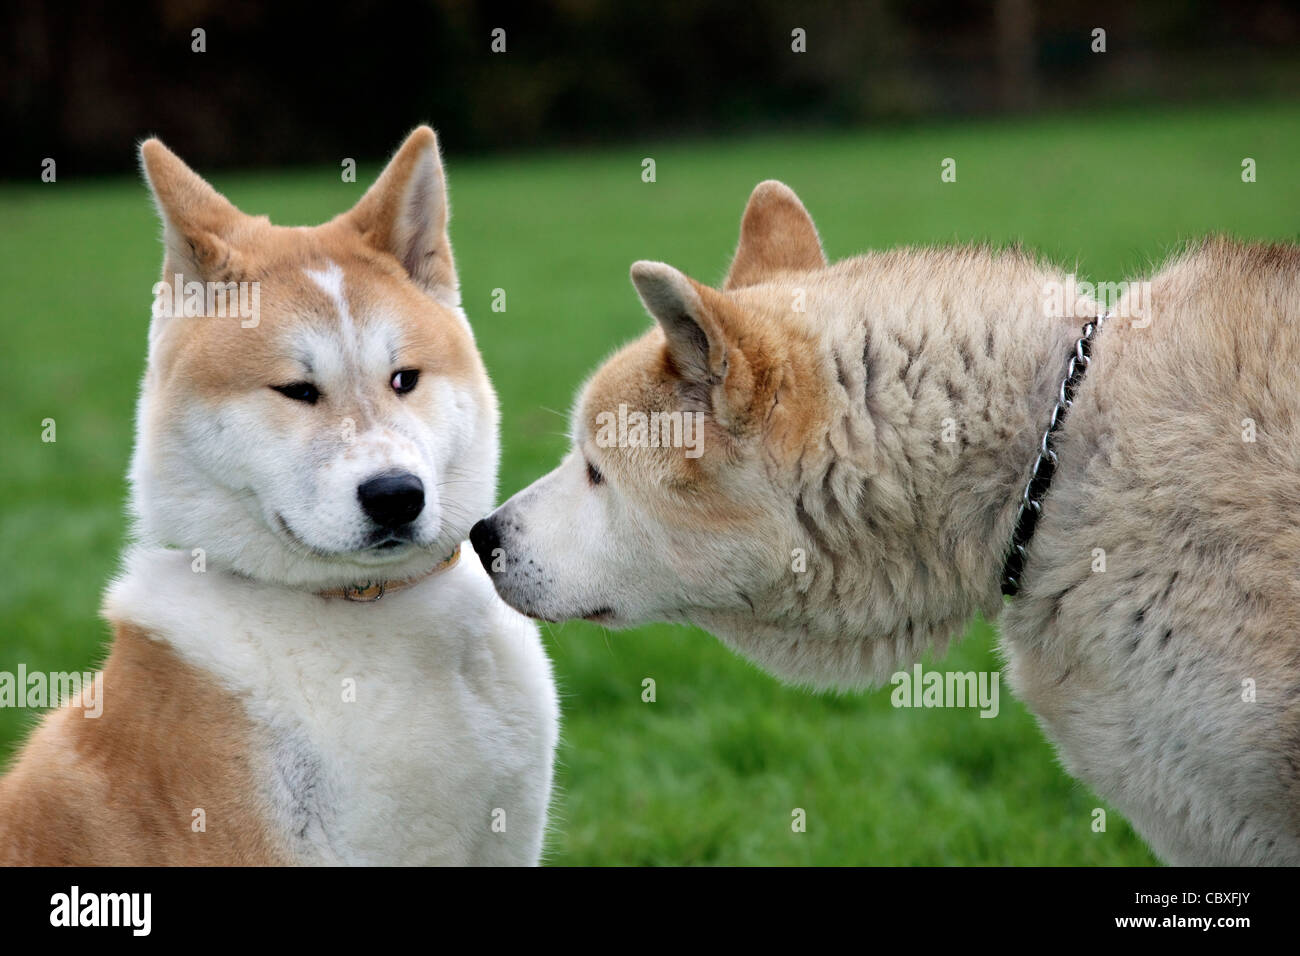 Akita Inu / Japanese Akita dogs (Canis lupus familiaris) meeting and greeting in garden Stock Photo